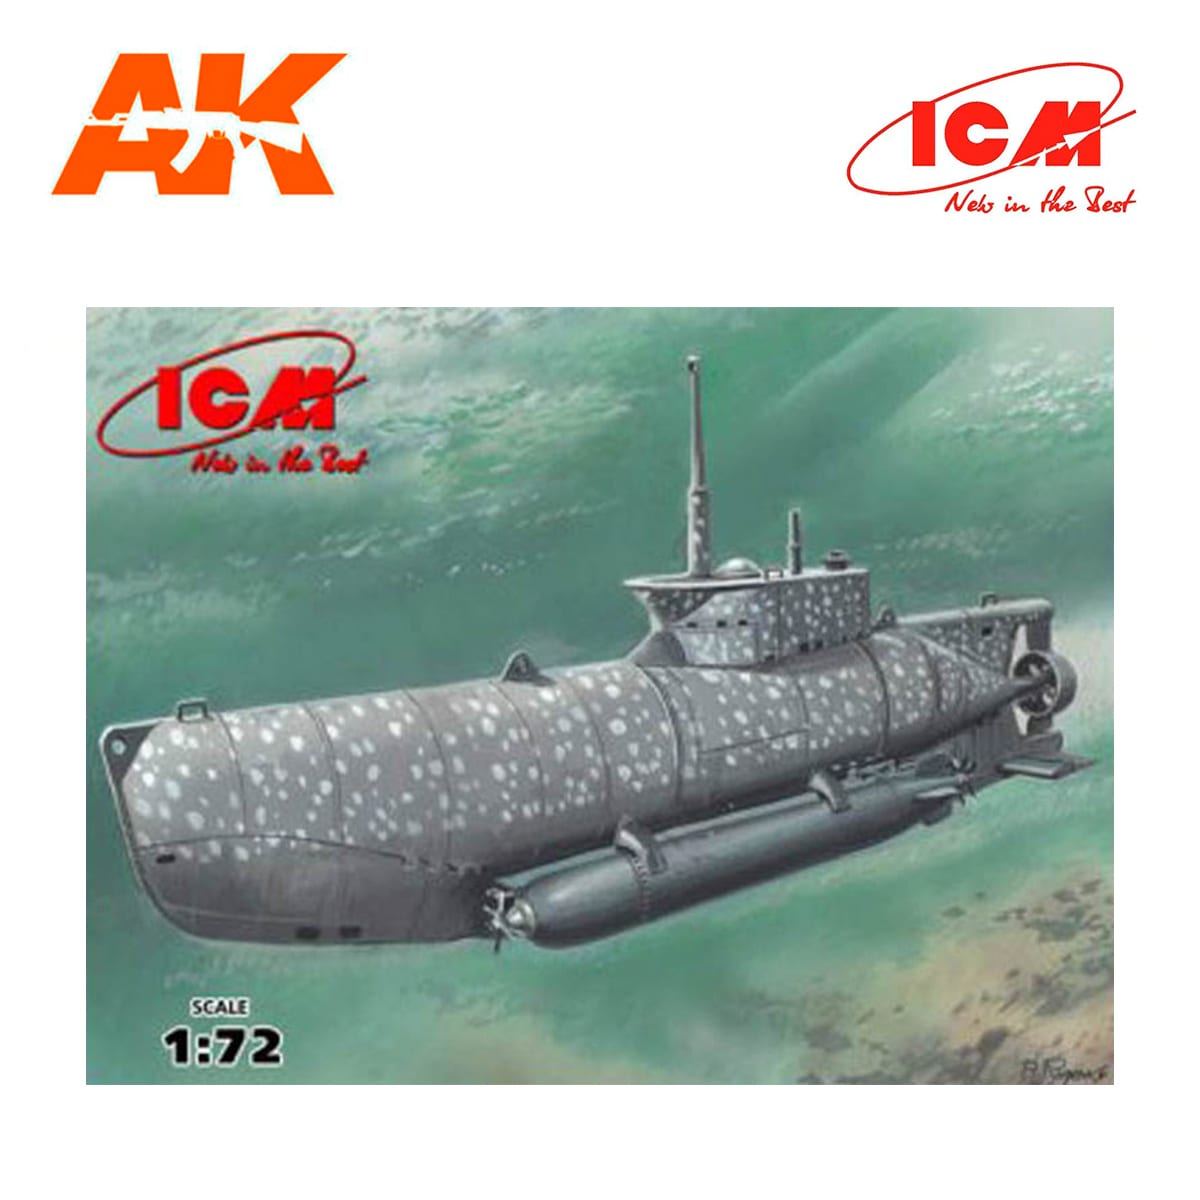 U-Boat Type XXVIIB “Seehund” (early), WWII German Midget Submarine 1/72